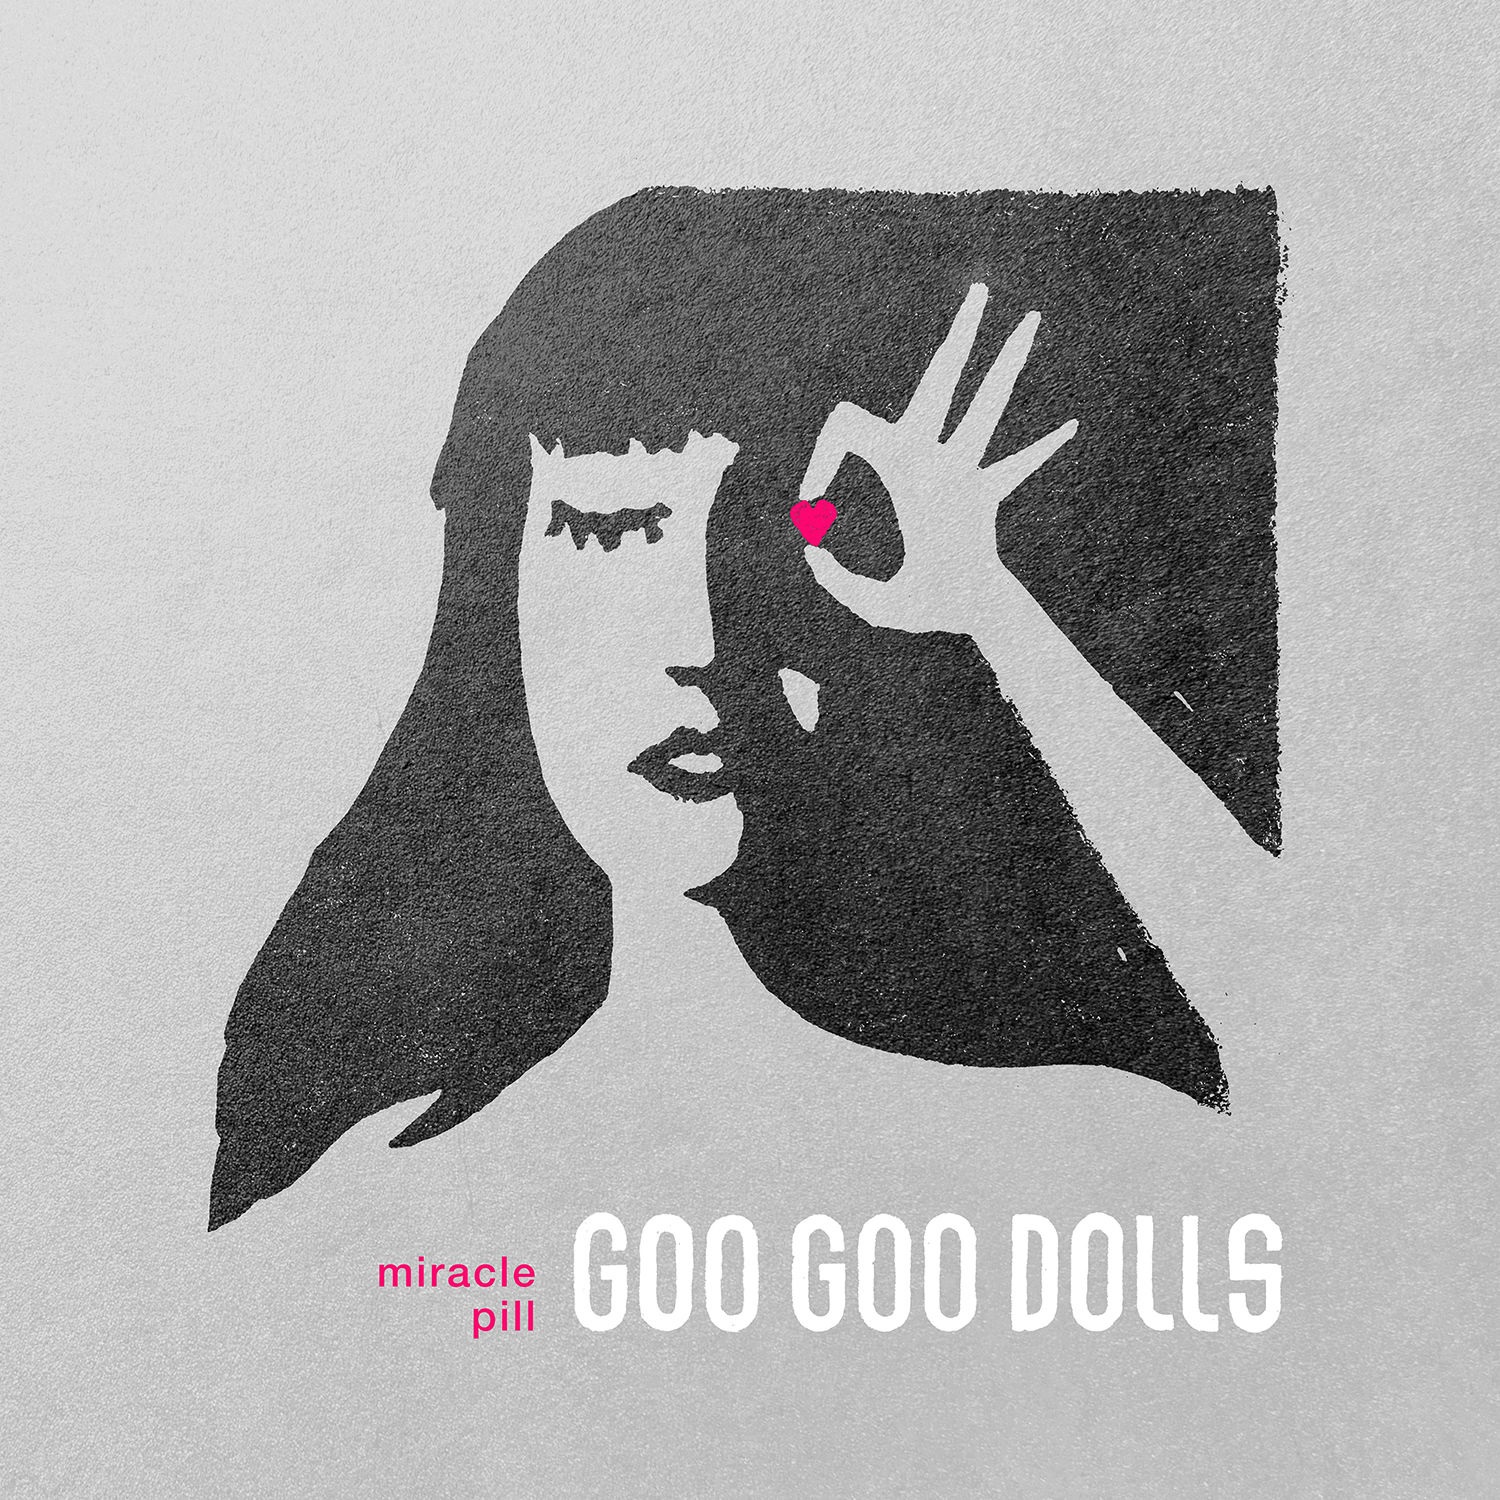 The Goo Goo Dolls – Miracle Pill (Deluxe Edition) (2019/2020) [FLAC 24bit/96kHz]